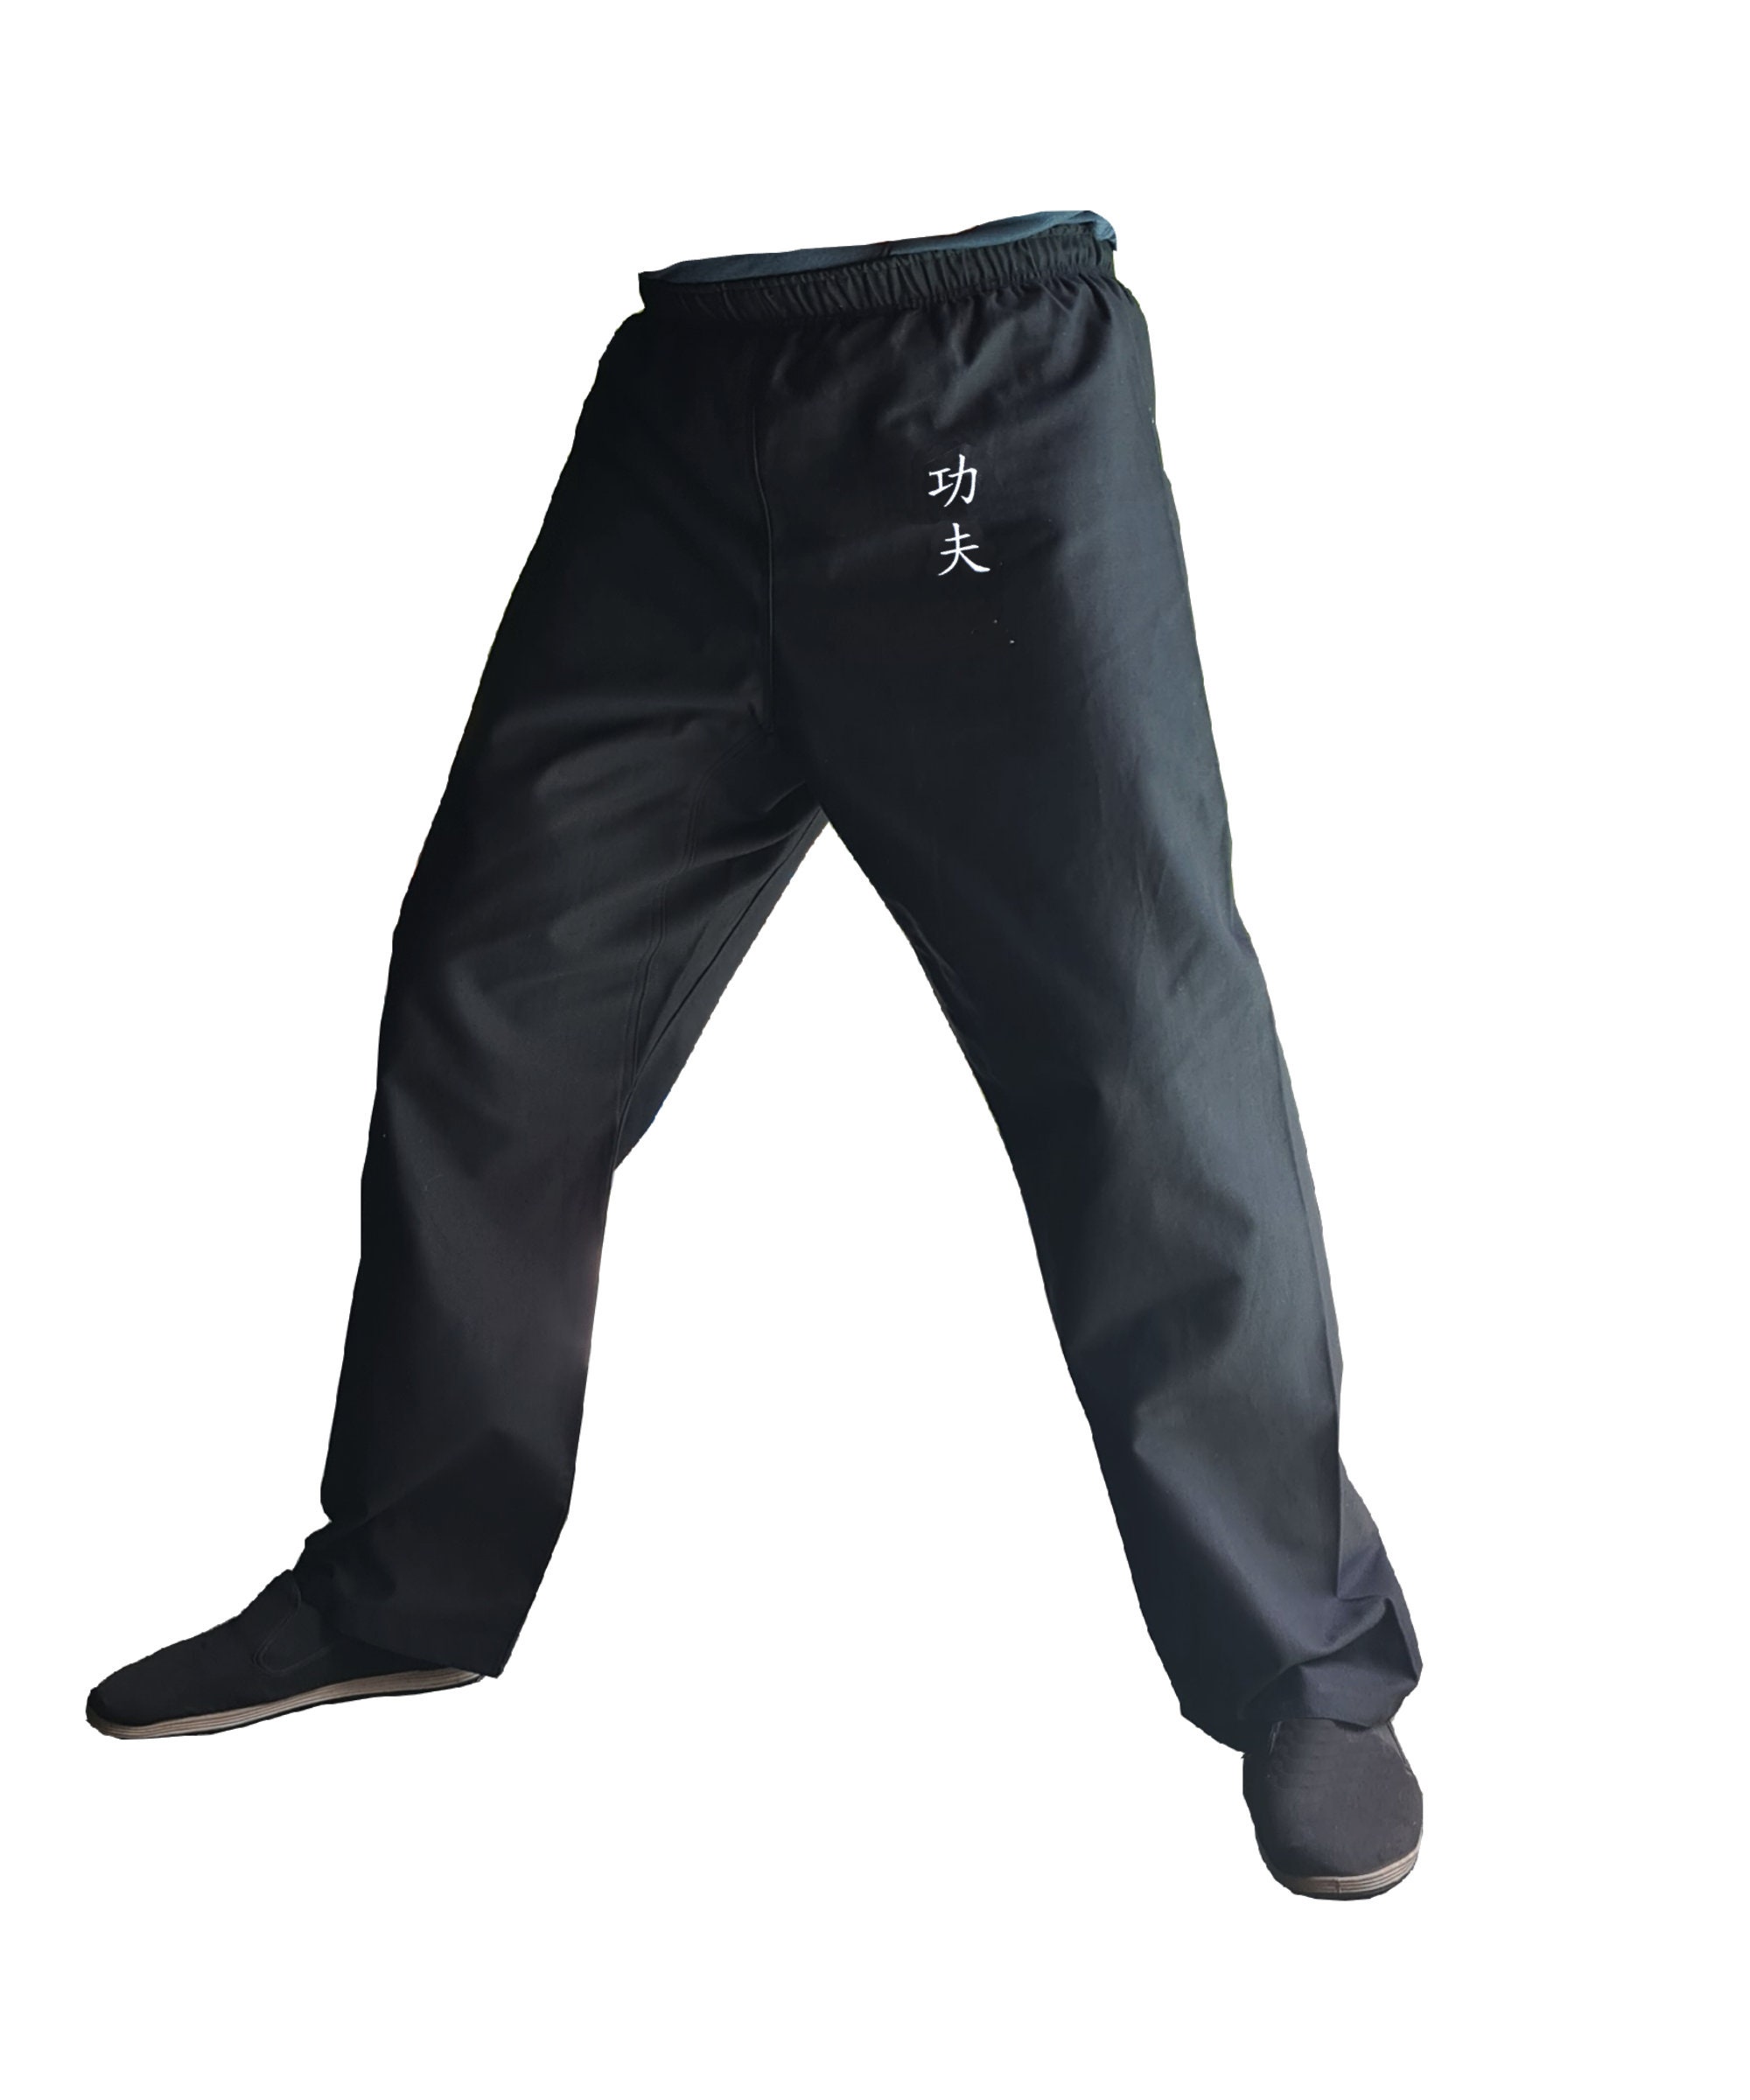 Black Embroidery Shaolin Kung fu Pants Tai Chi Wushu Martial arts Trousers  | eBay